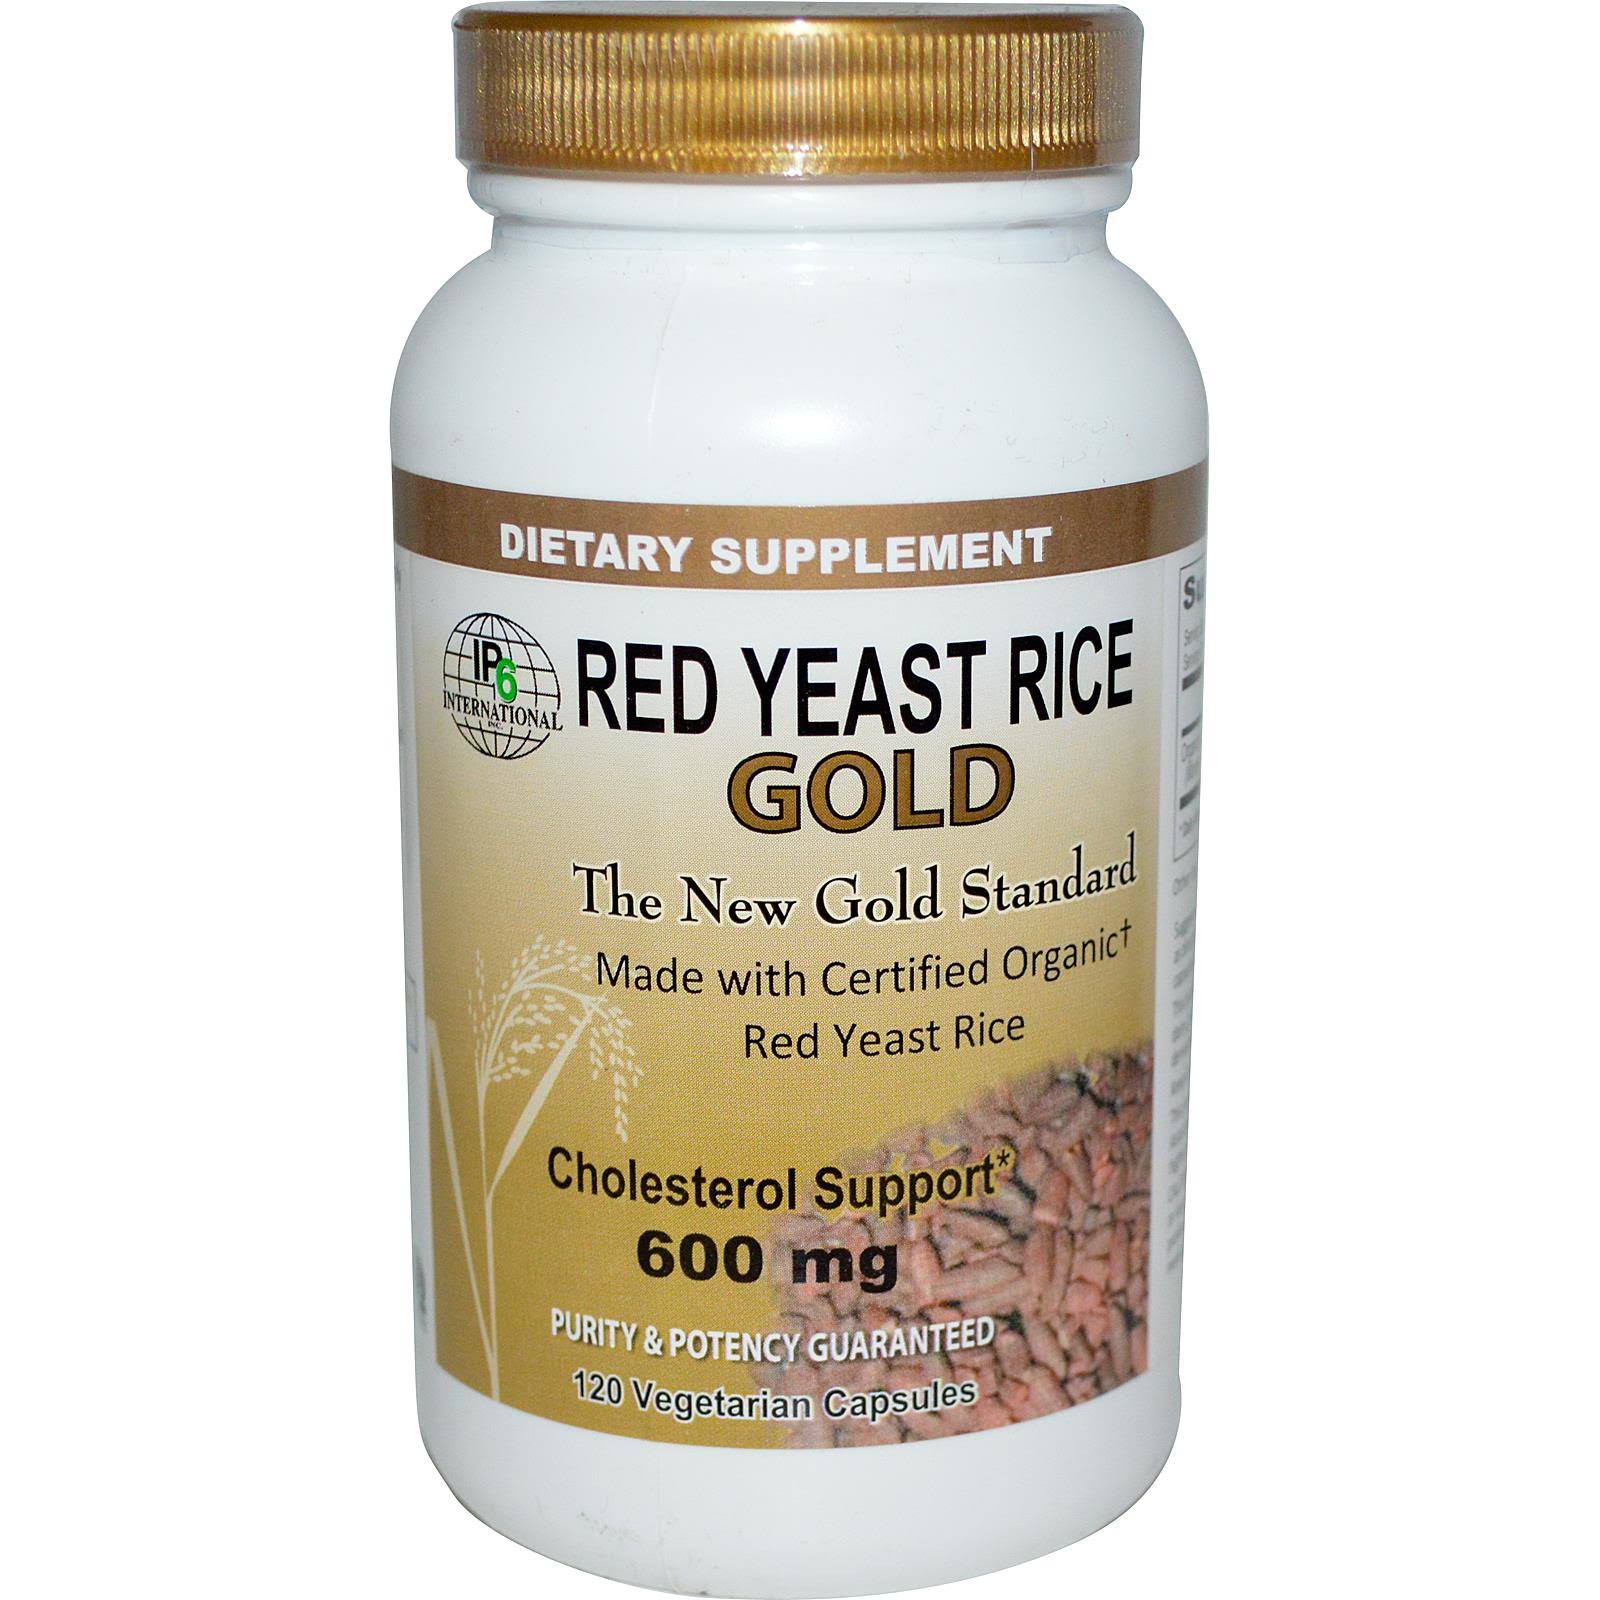 Ip 6 International Red Yeast Rice Gold Dietary Supplement - 600mg, 120ct